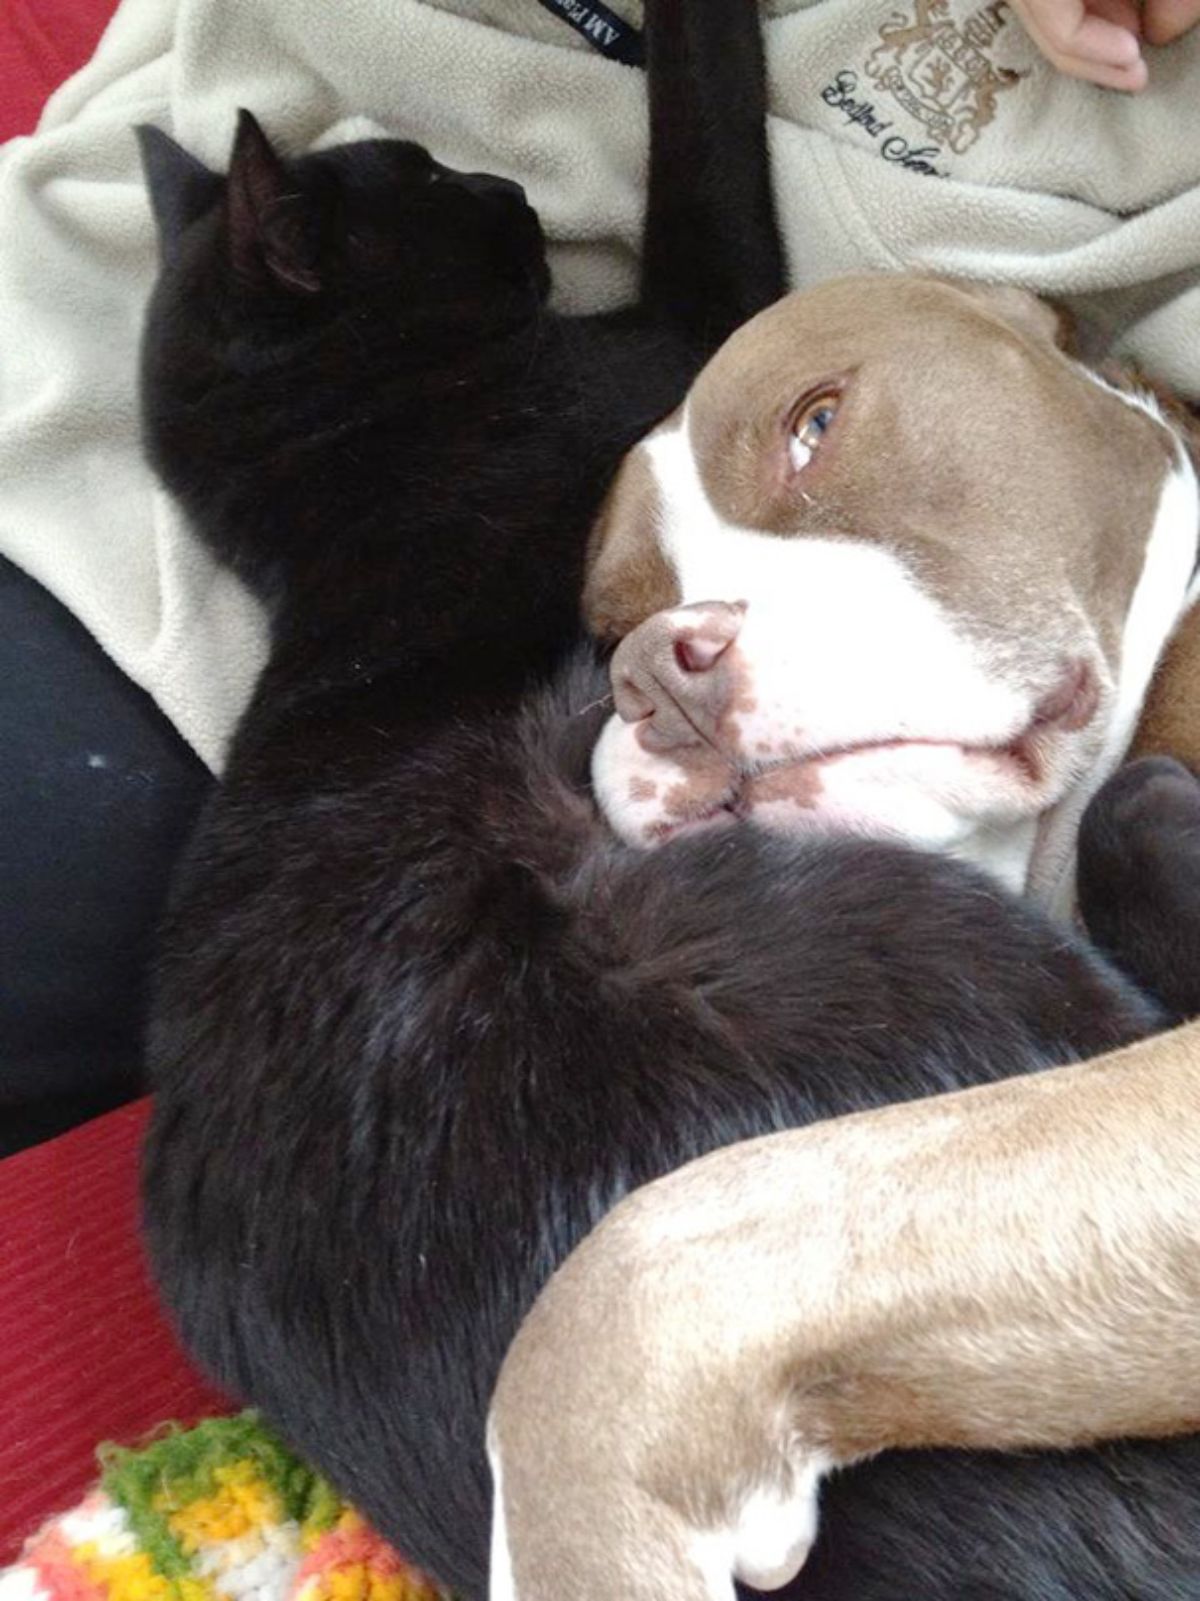 grey and white pitbull cuddling a black cat laying on someone's lap